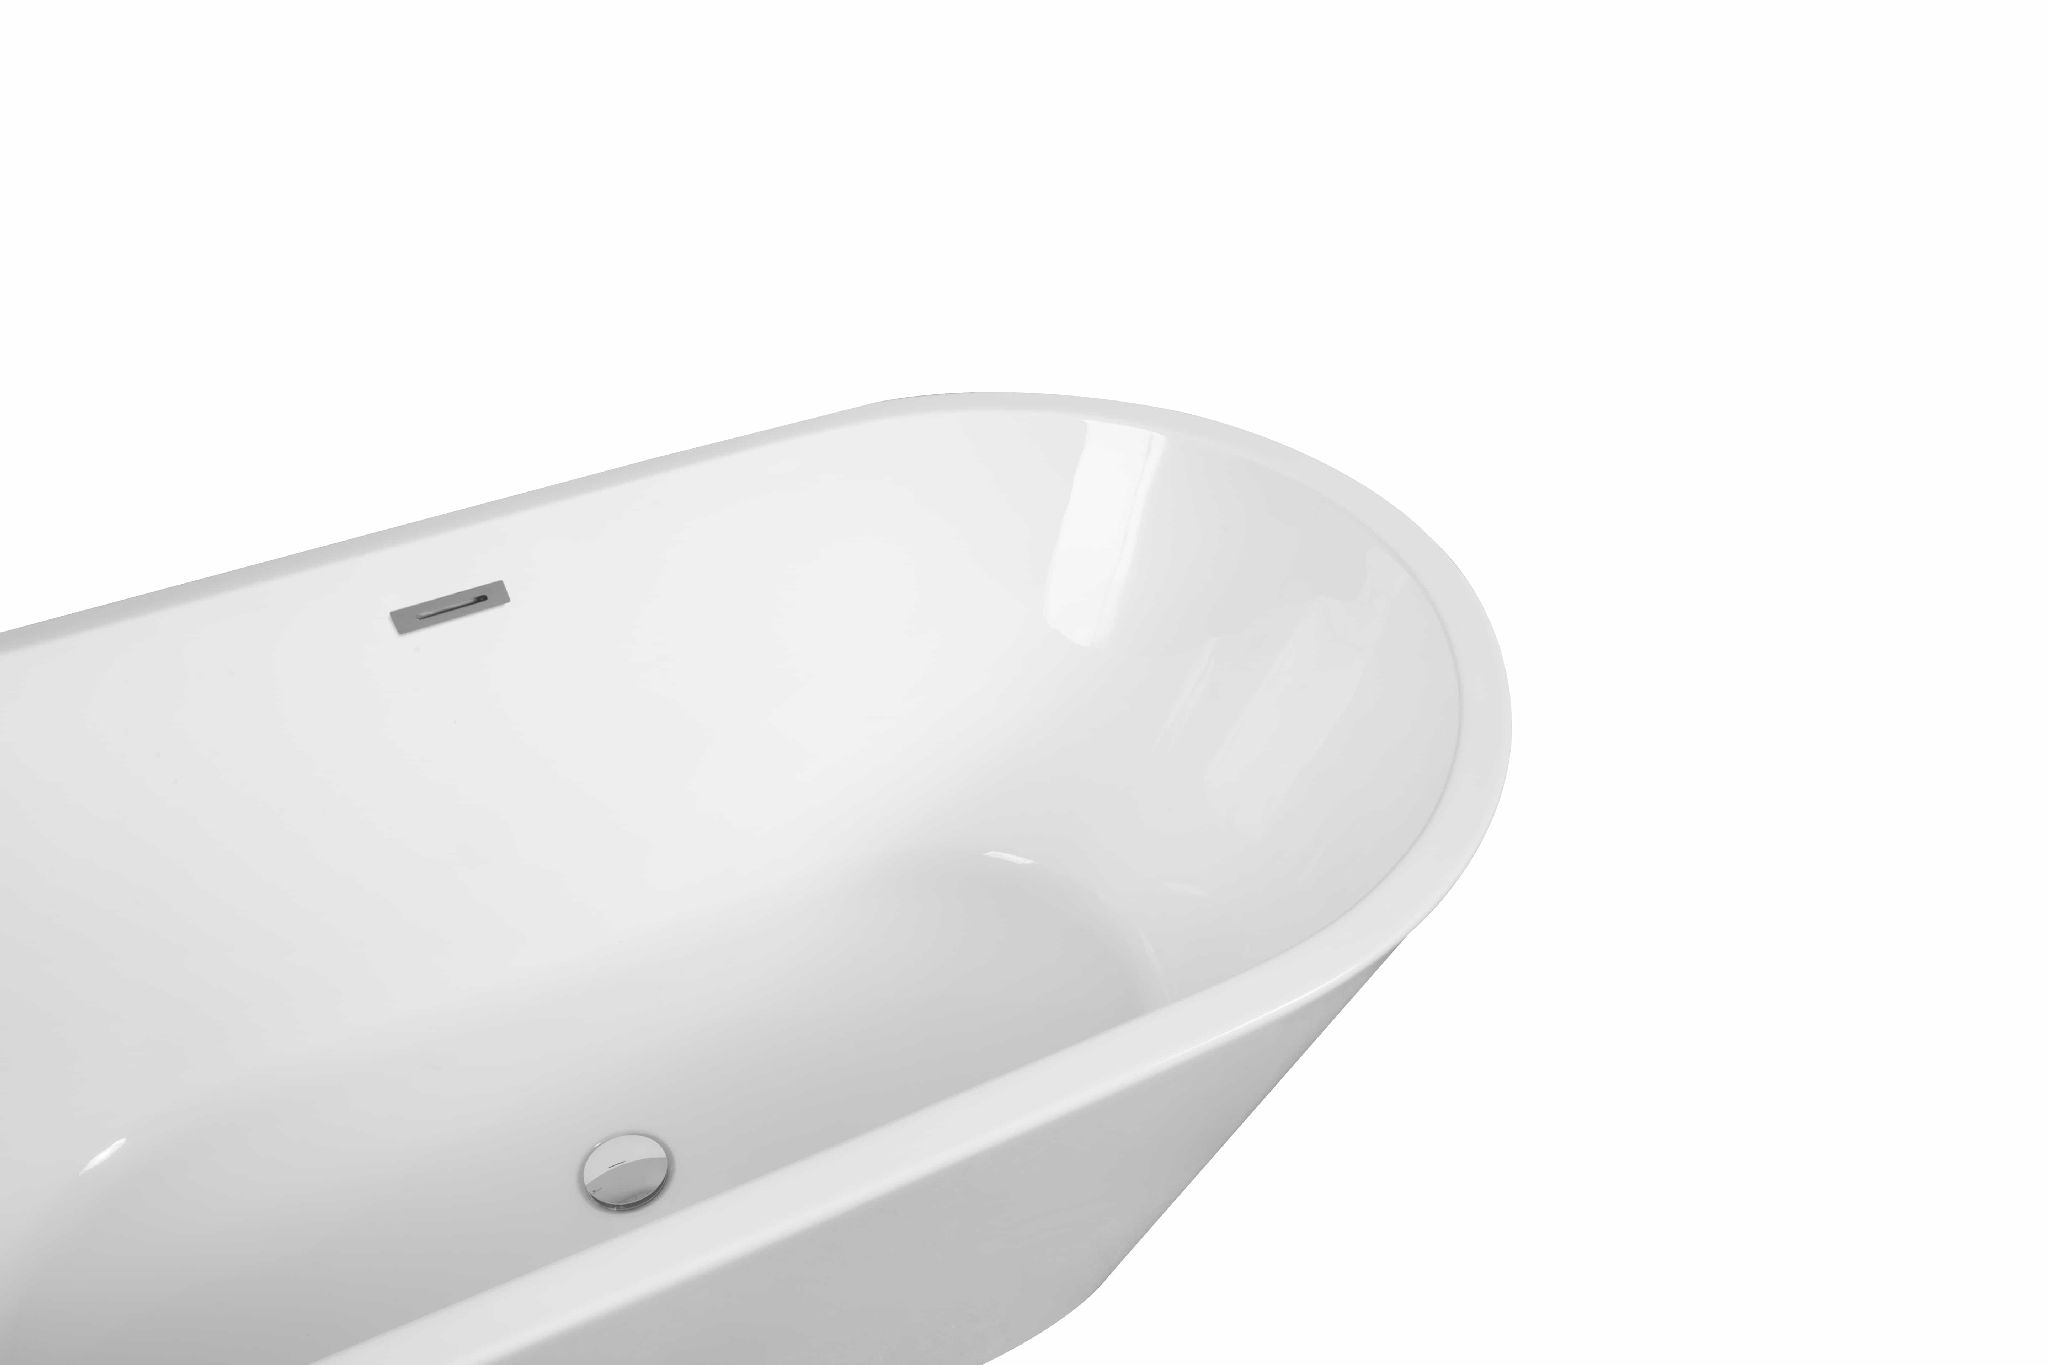 SkySea Bath Tub 67 White Acrylic Free Standing Soaker, Center Drain And Overflow